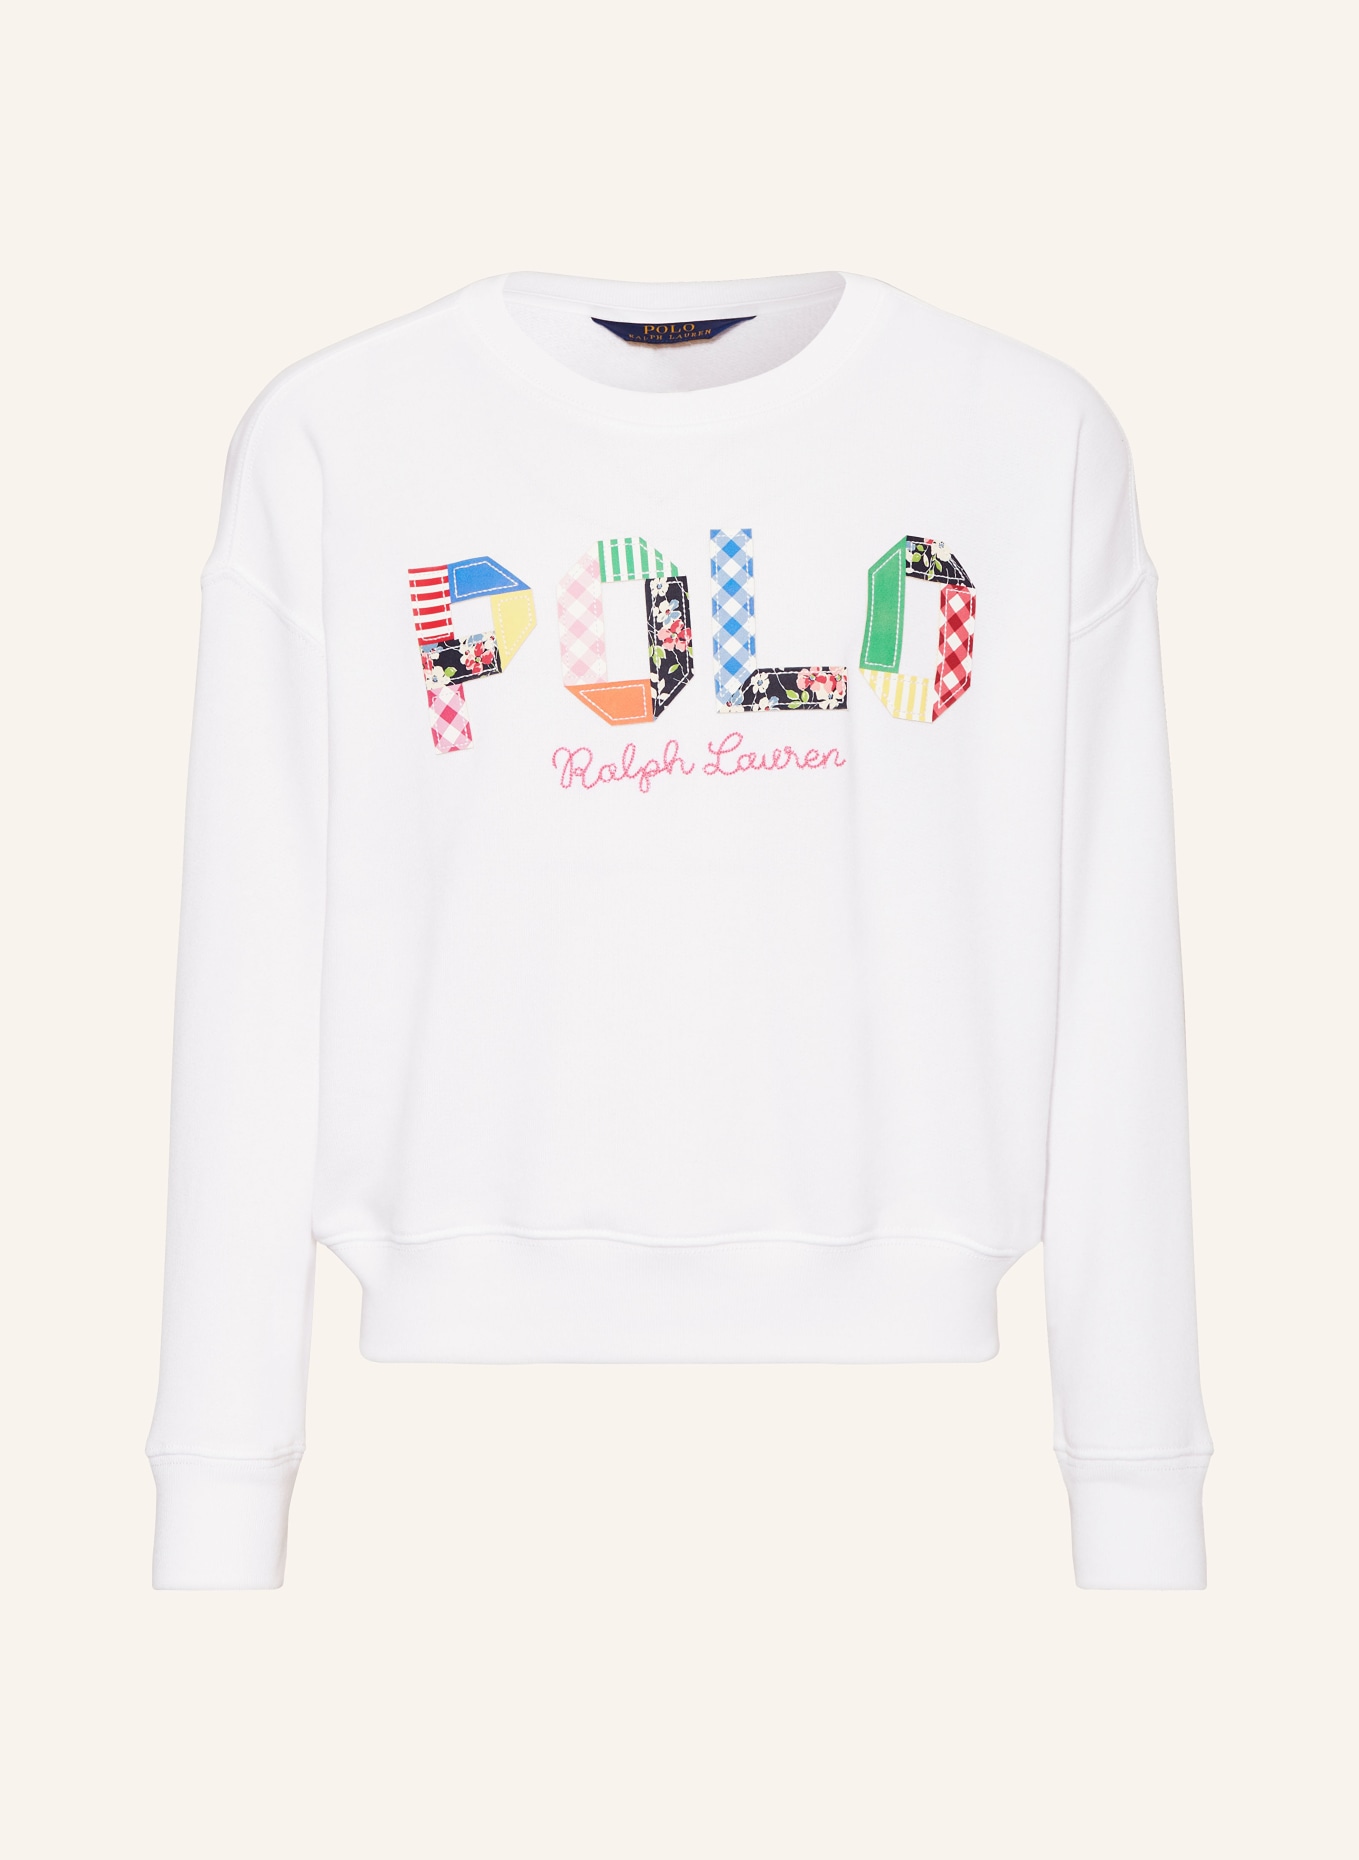 POLO RALPH LAUREN Sweatshirt, Farbe: WEISS (Bild 1)